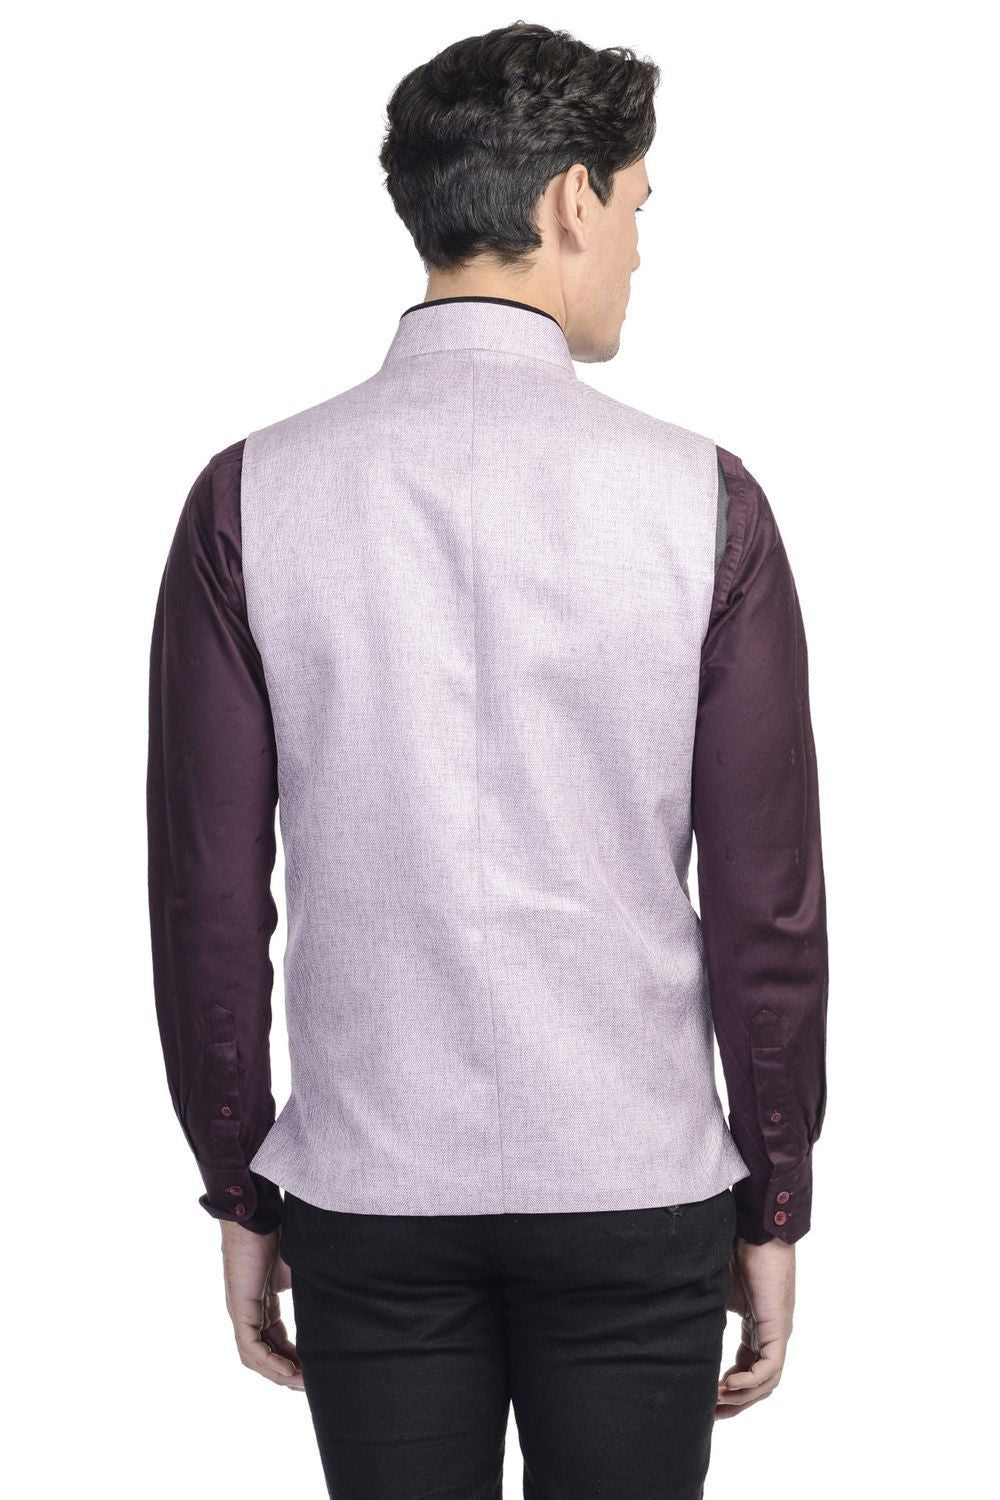 Rayon Purple Nehru Jacket